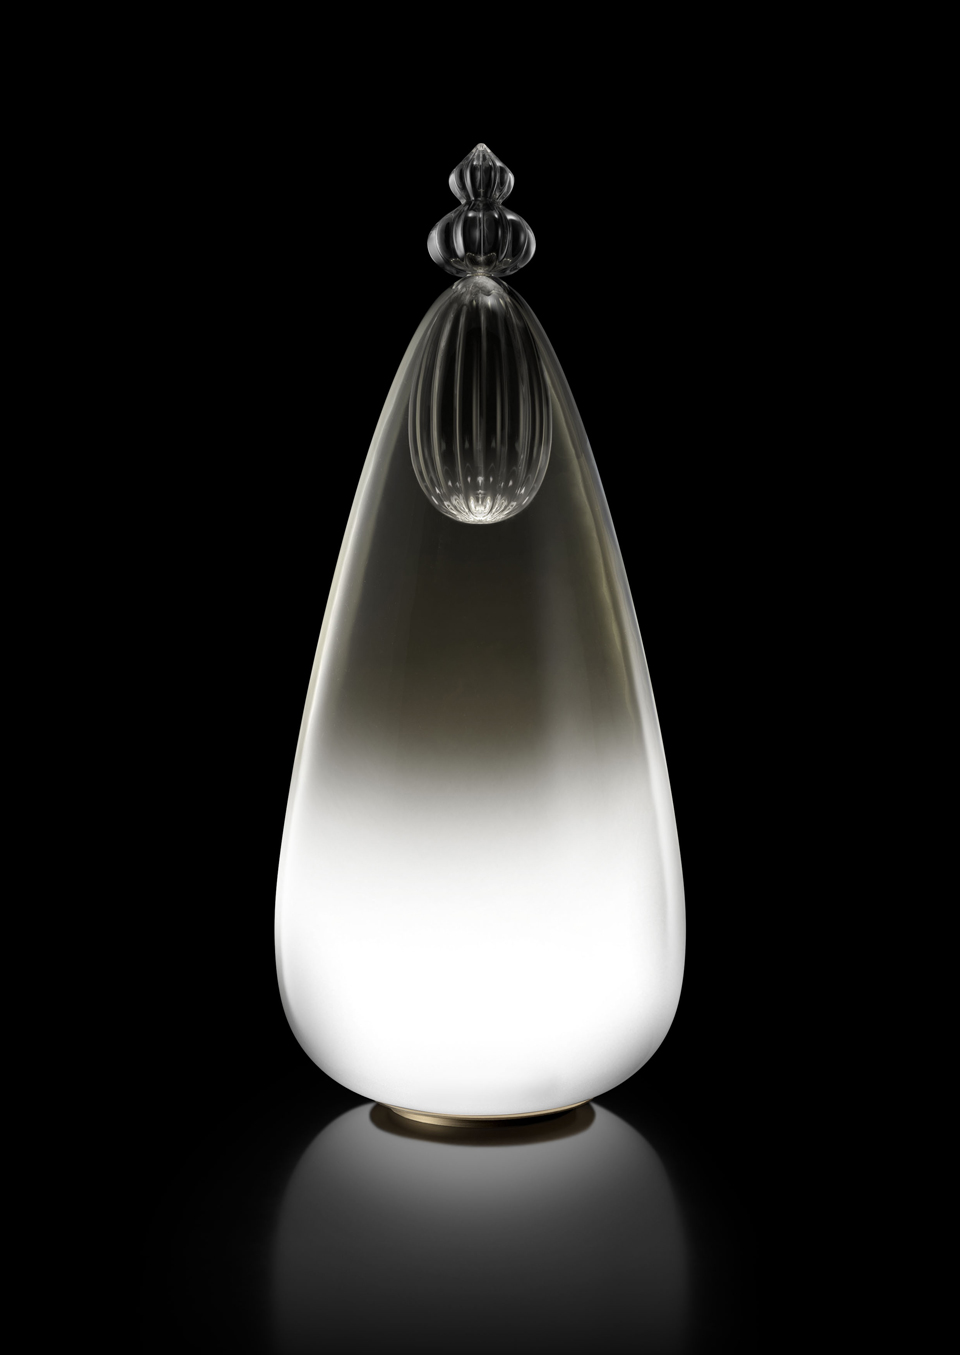 Padma lampe de table en cristal de Murano gris et noir. Barovier&Toso. 